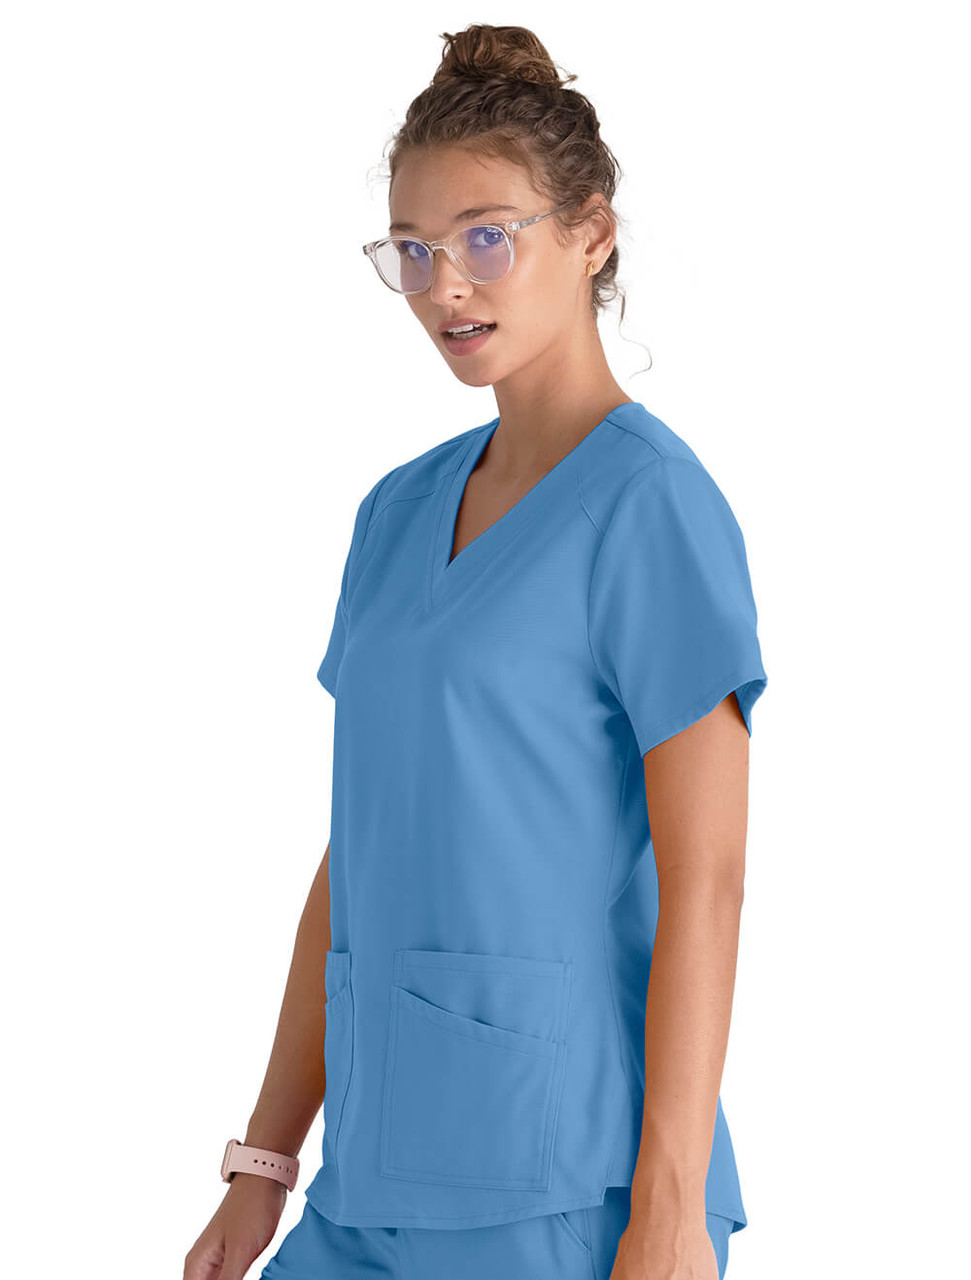 3 Reasons Medical Professionals Wear Blue Sky Scrubs - Blue Sky Scrubs